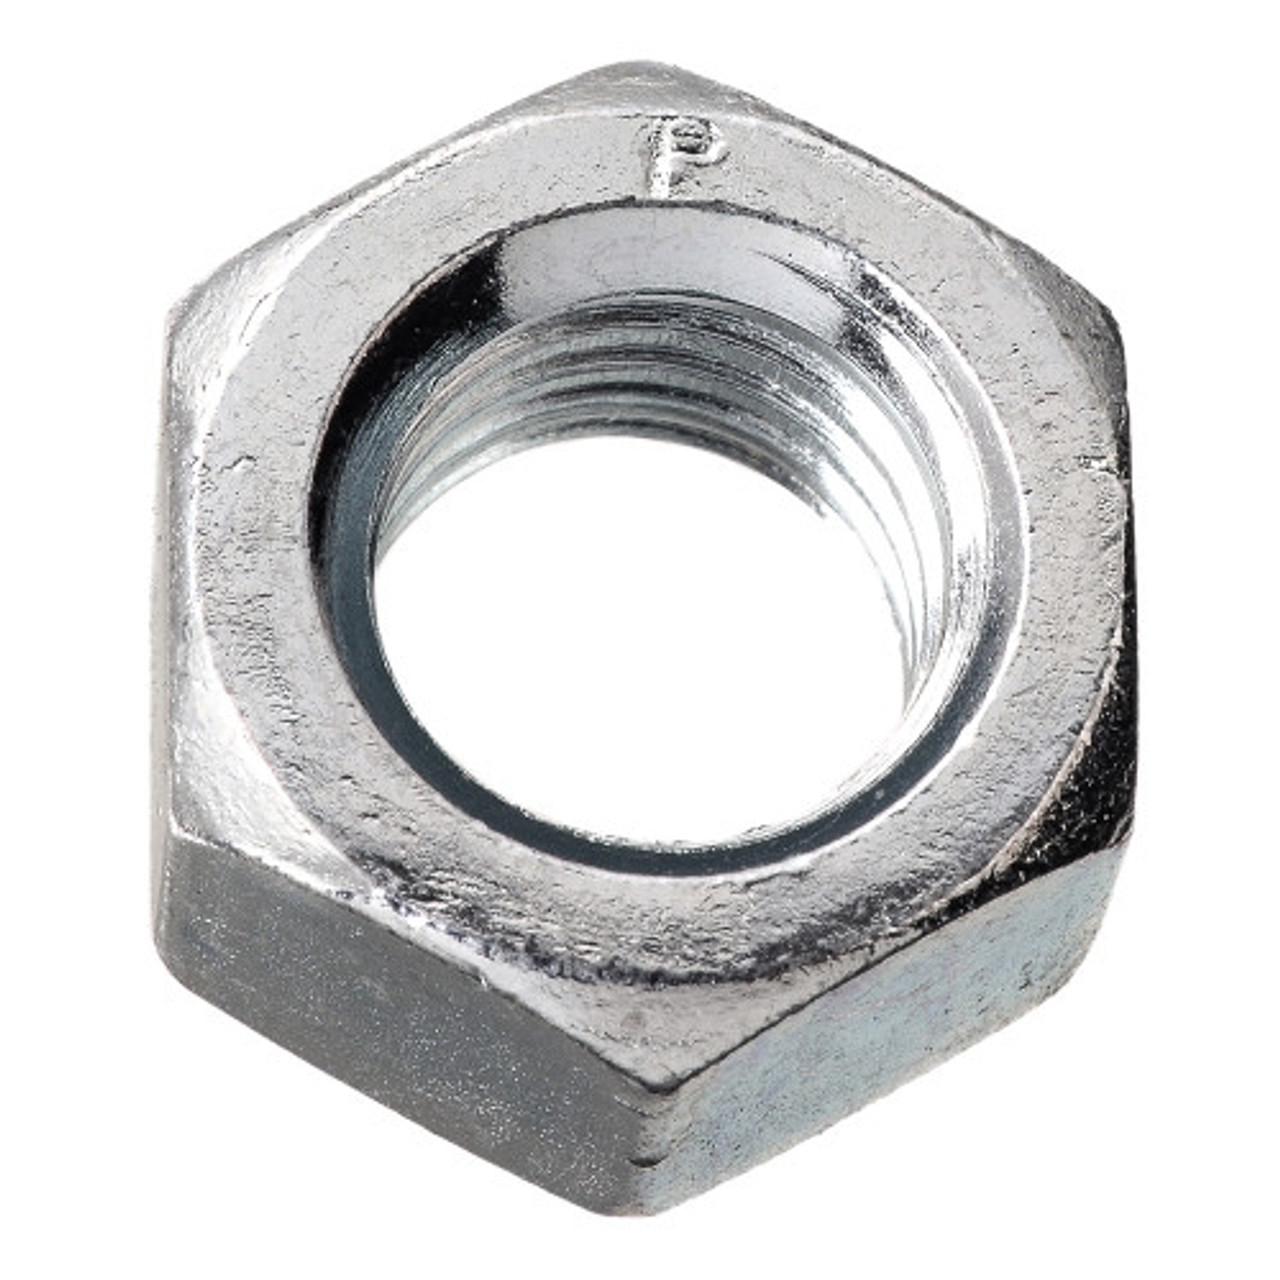 1/2"-20 UNF Grade 5 Zinc Plated Hex Nut 50 Pc.   088-022